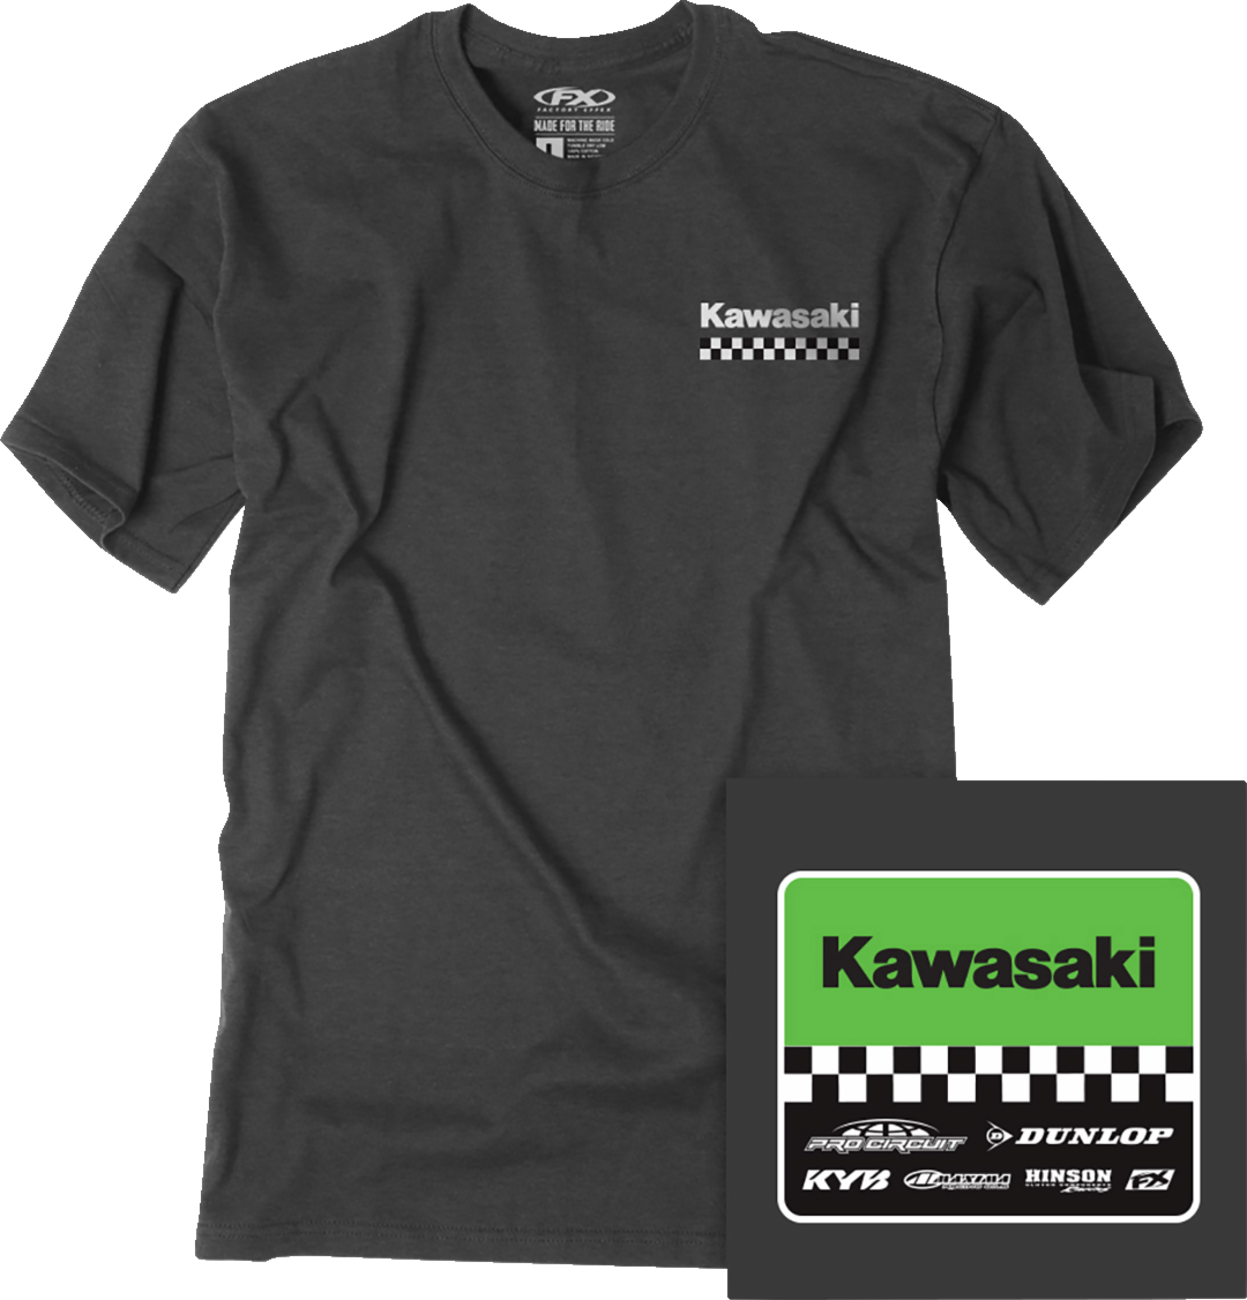 FACTORY EFFEX Kawasaki Starting Line T-Shirt - Heather Charcoal - Medium 27-87102